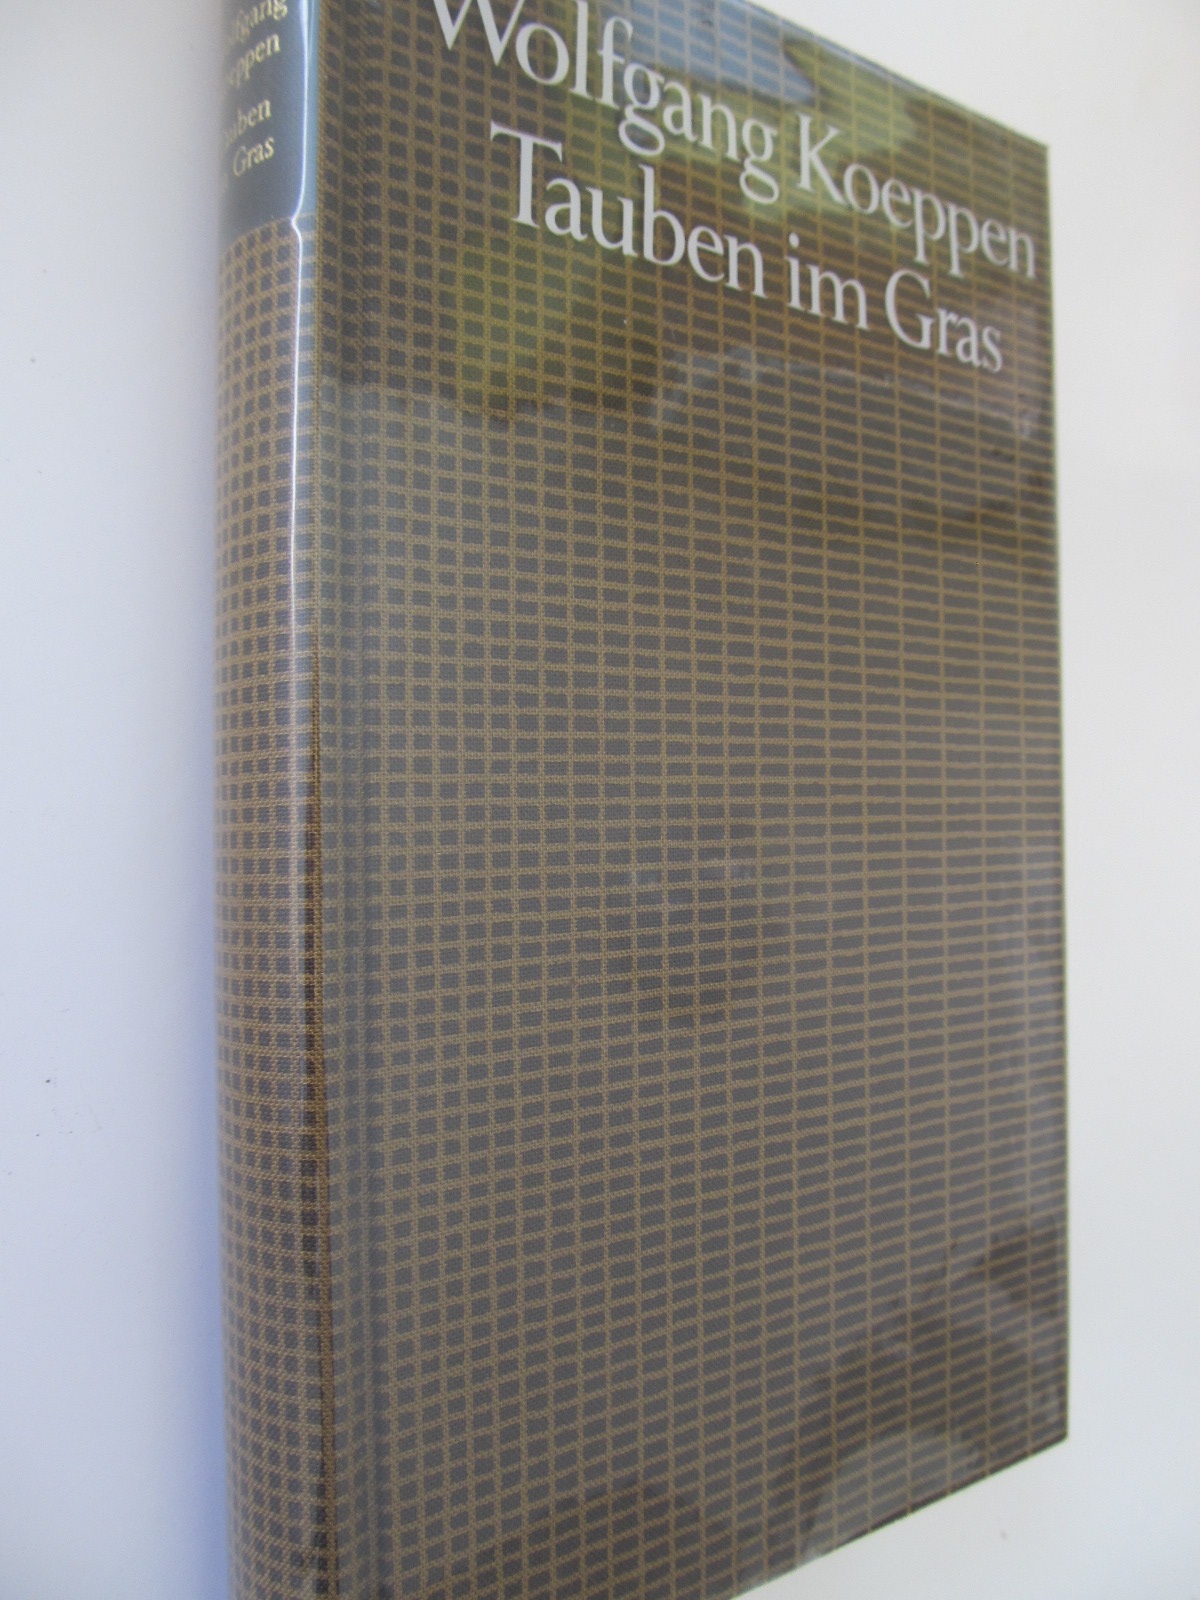 Tauben im Gras - Wolfgang Koeppen | Detalii carte